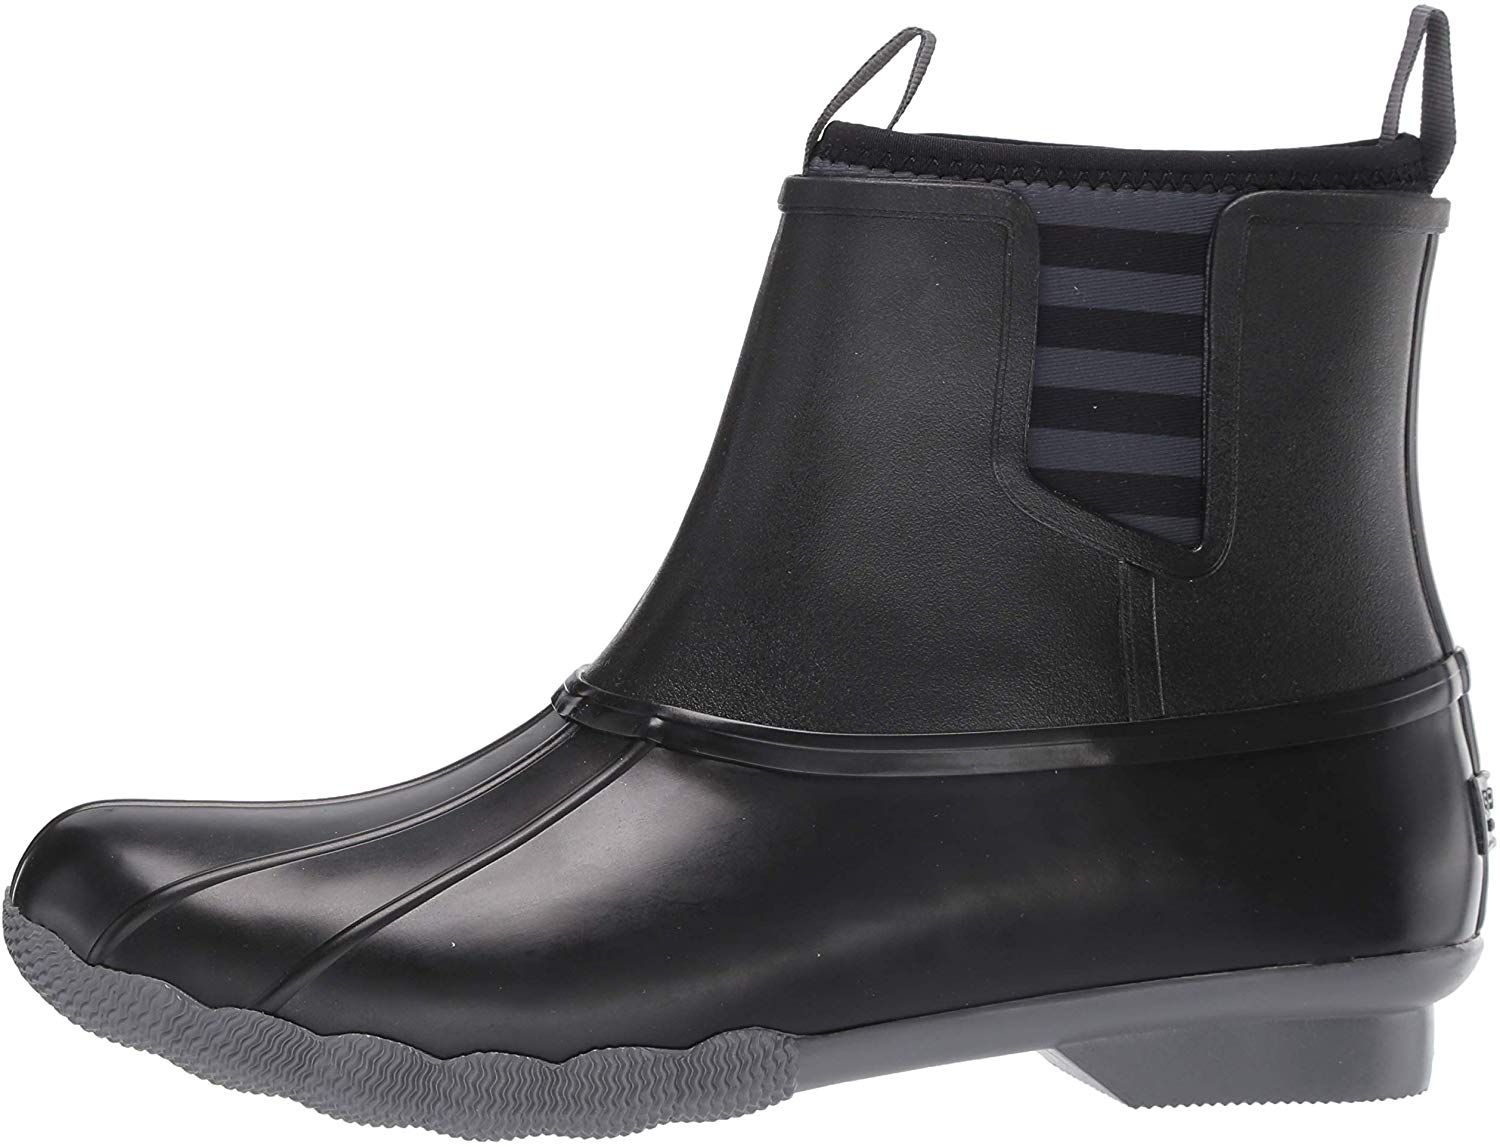 SPERRY Women's Saltwater Chelsea Rubber Boots, Black, Size 9.0 h0Zn | eBay